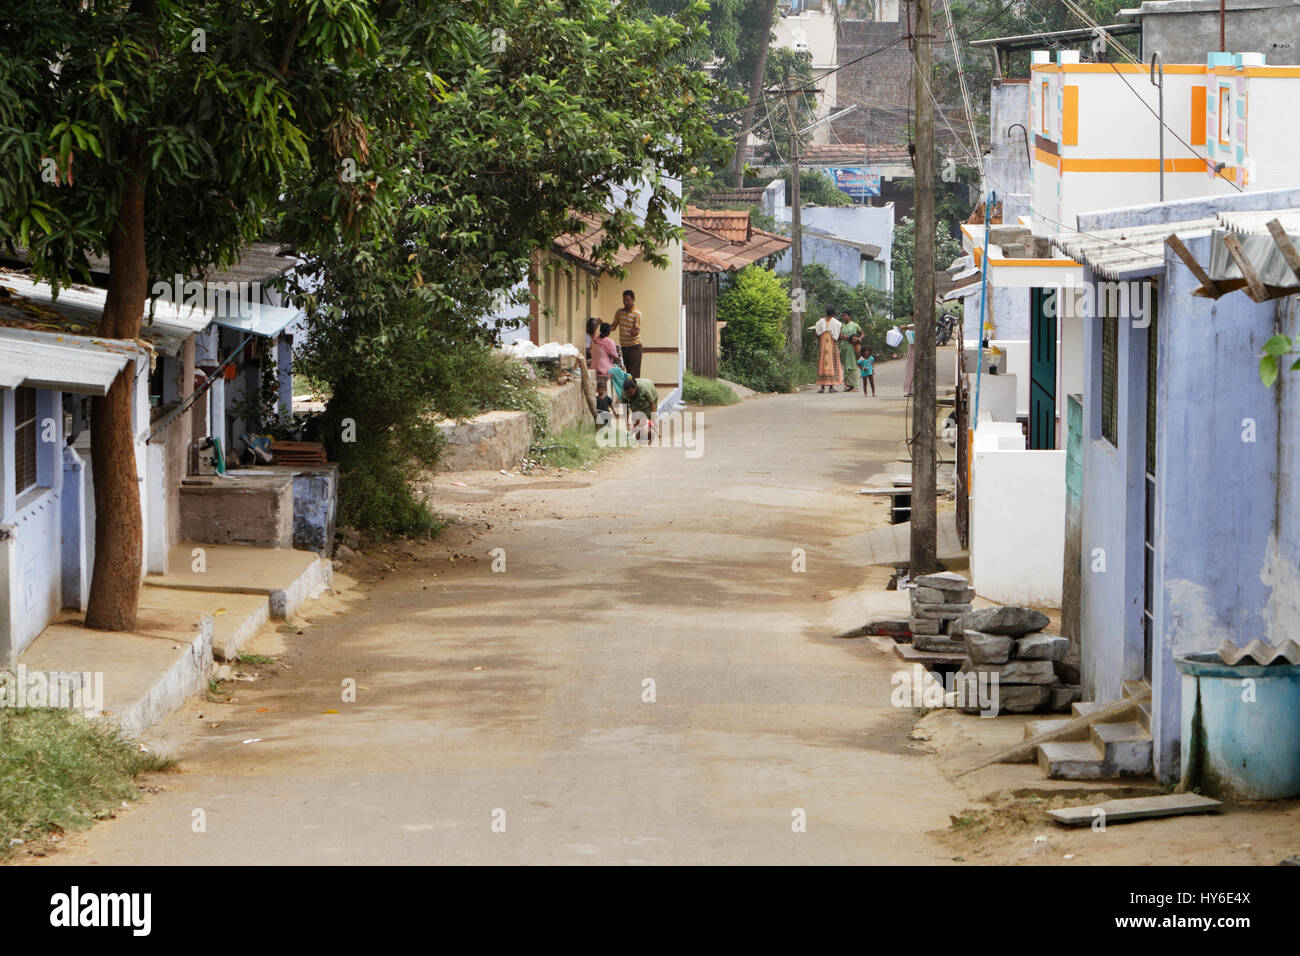 Life on an Indian street in a town Madukkarai near Coimbatore, Tamil Nadu, India Stock Photo